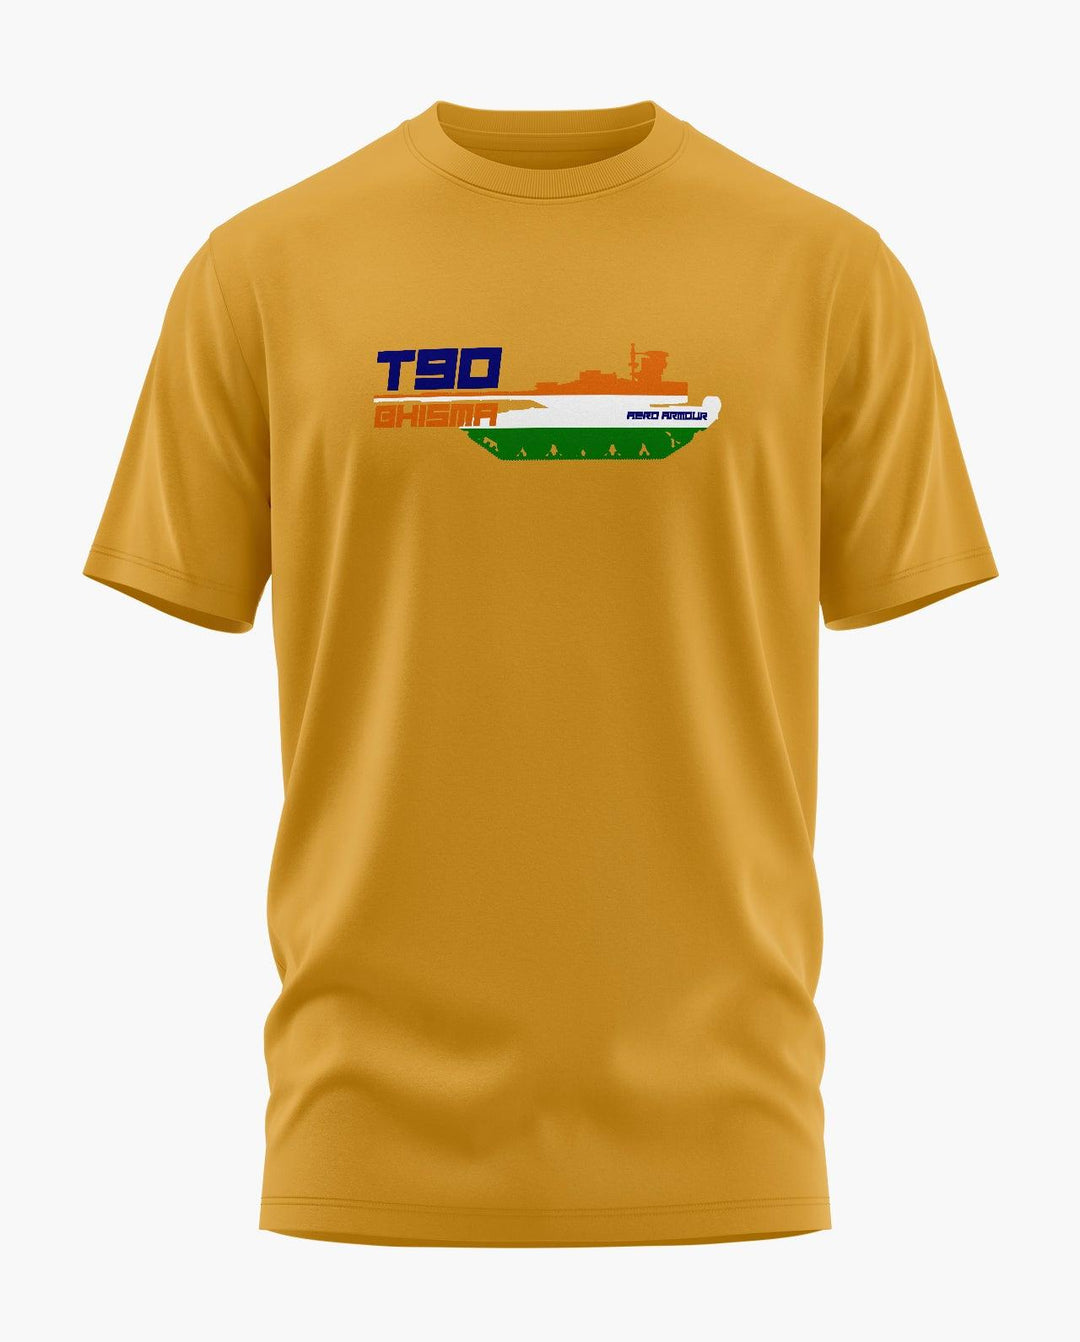 T-90 Bhishma T-Shirt - Aero Armour